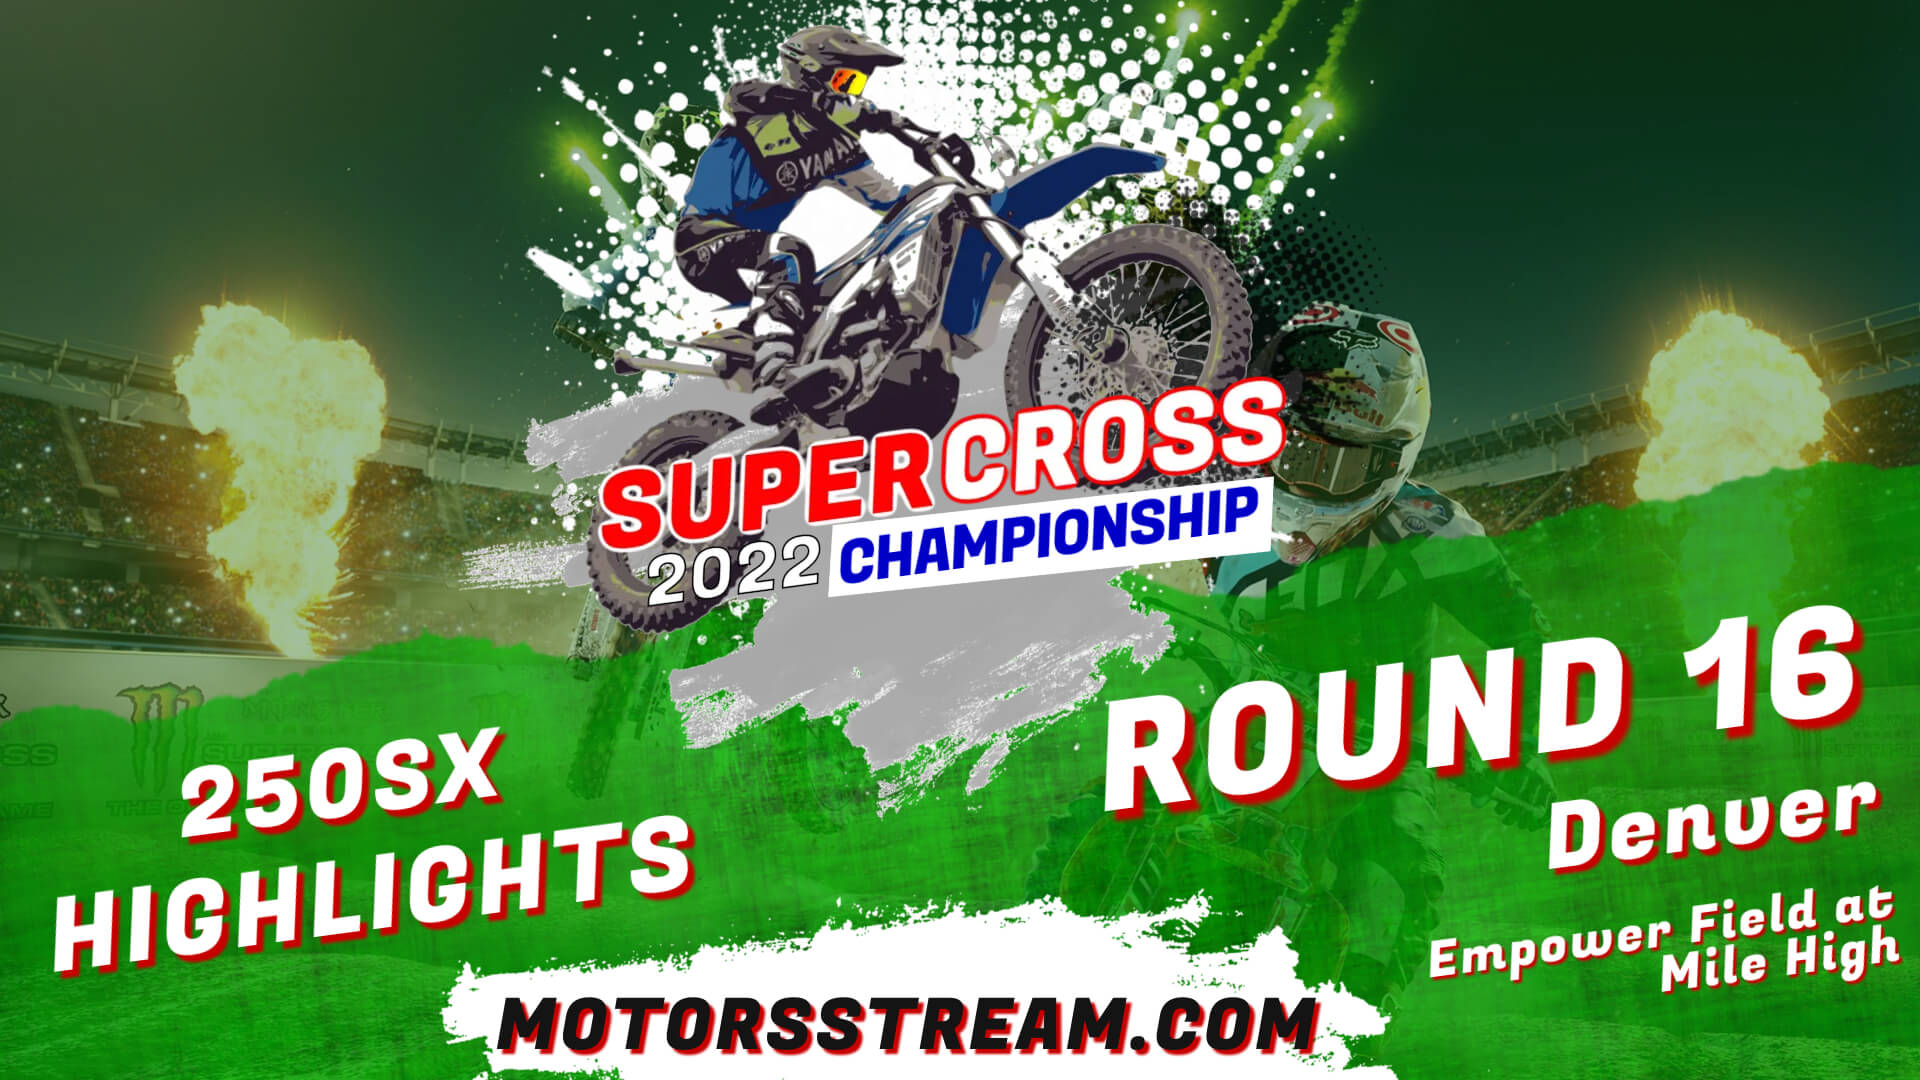 Supercross Round 16 Denver 250SX Highlights 2022